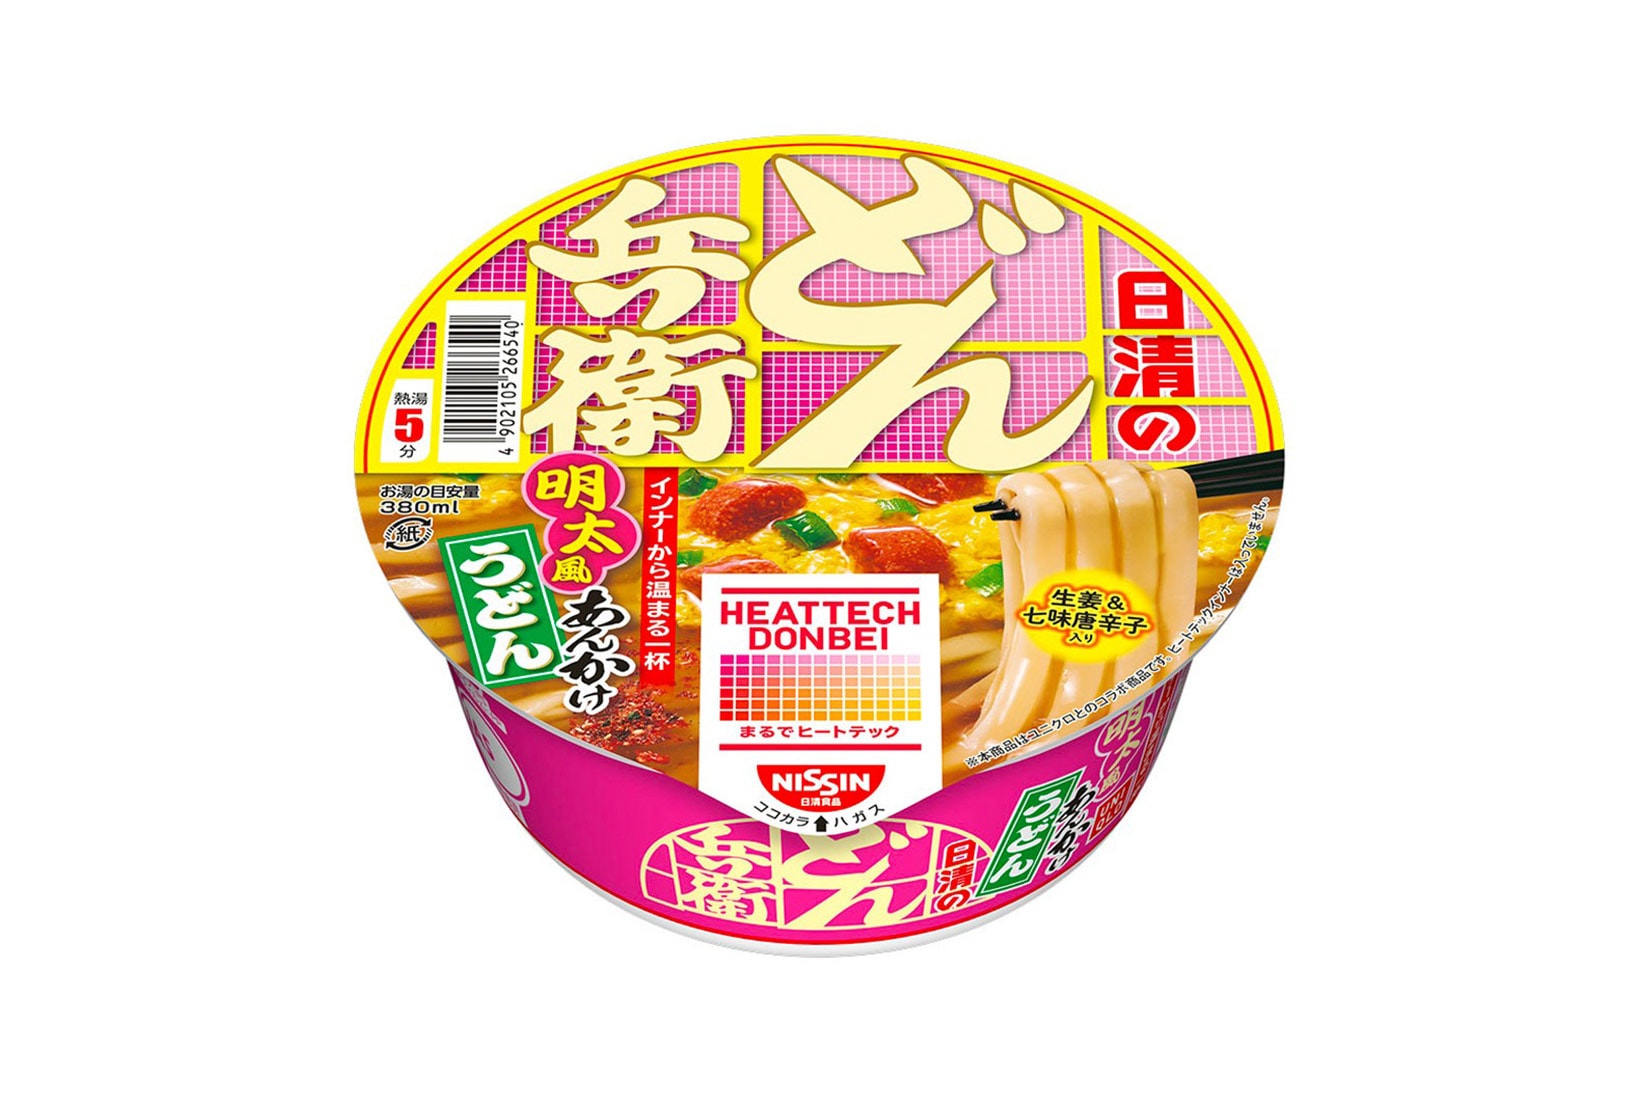 UNIQLO Nissin HEATTECH Donbei Meita-style Ankake Udon Collaboration Snack Instant Noodles